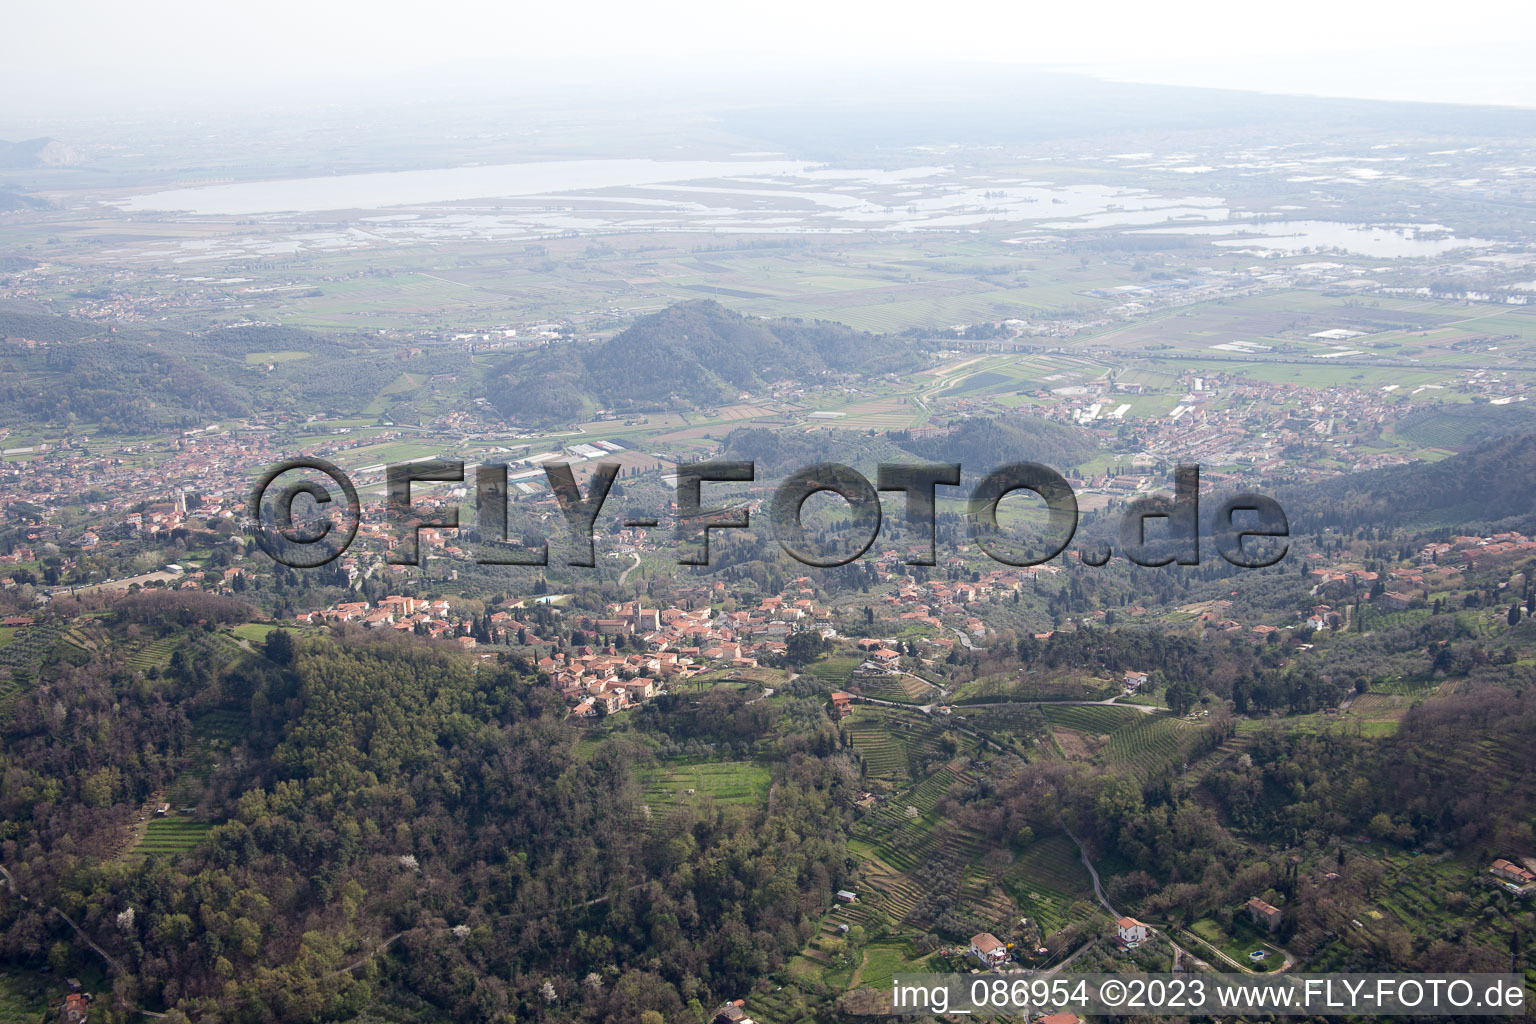 Luftbild von Pedona(I-Toskana) im Bundesland Toscana, Italien